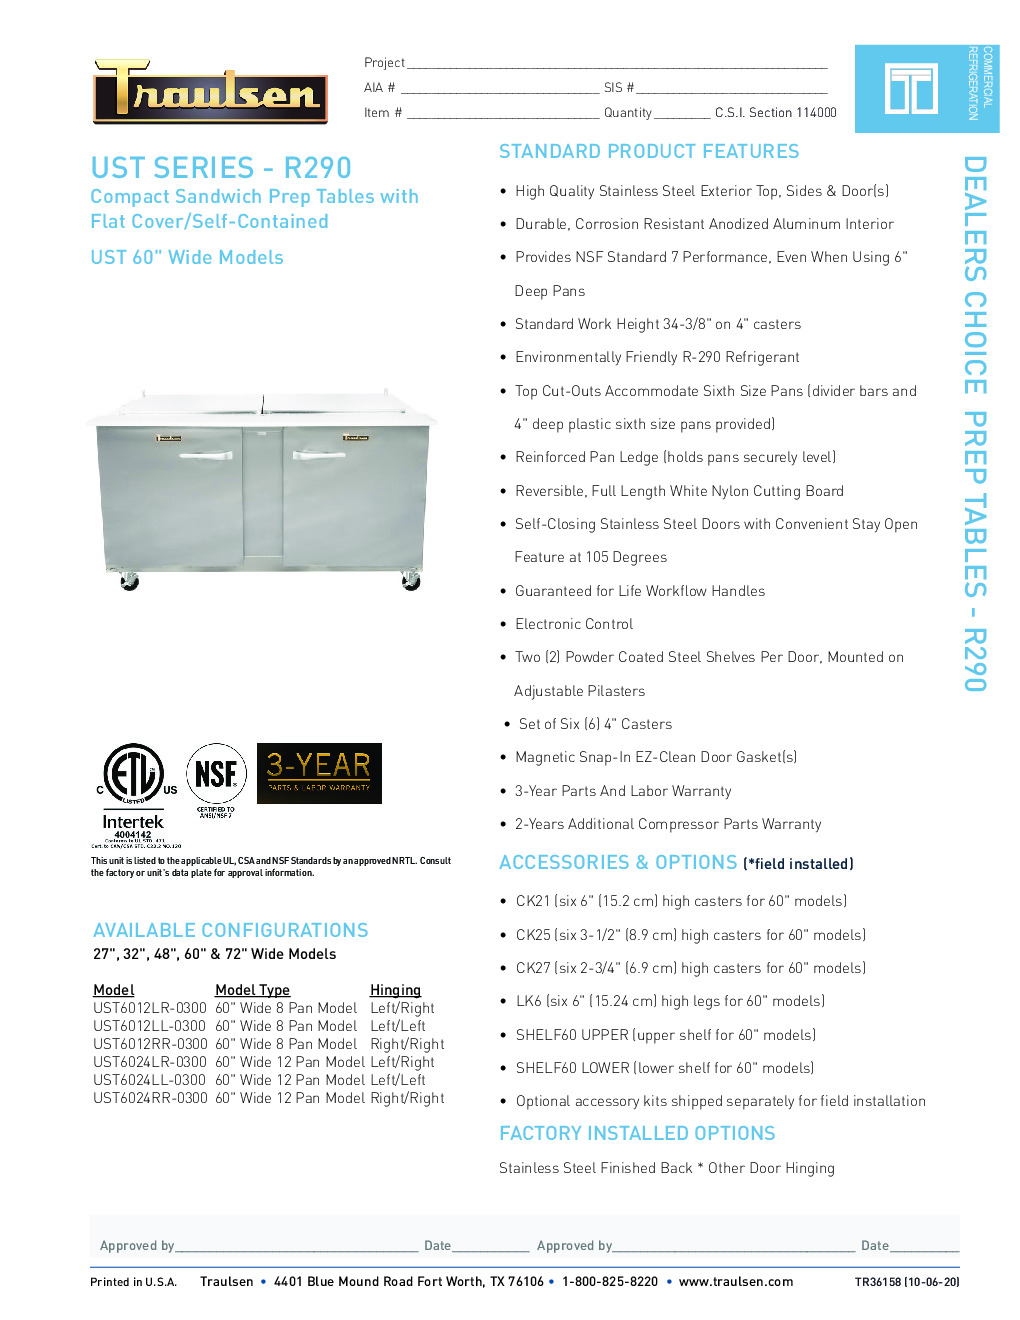 Traulsen UST6012LR-0300 Sandwich / Salad Unit Refrigerated Counter